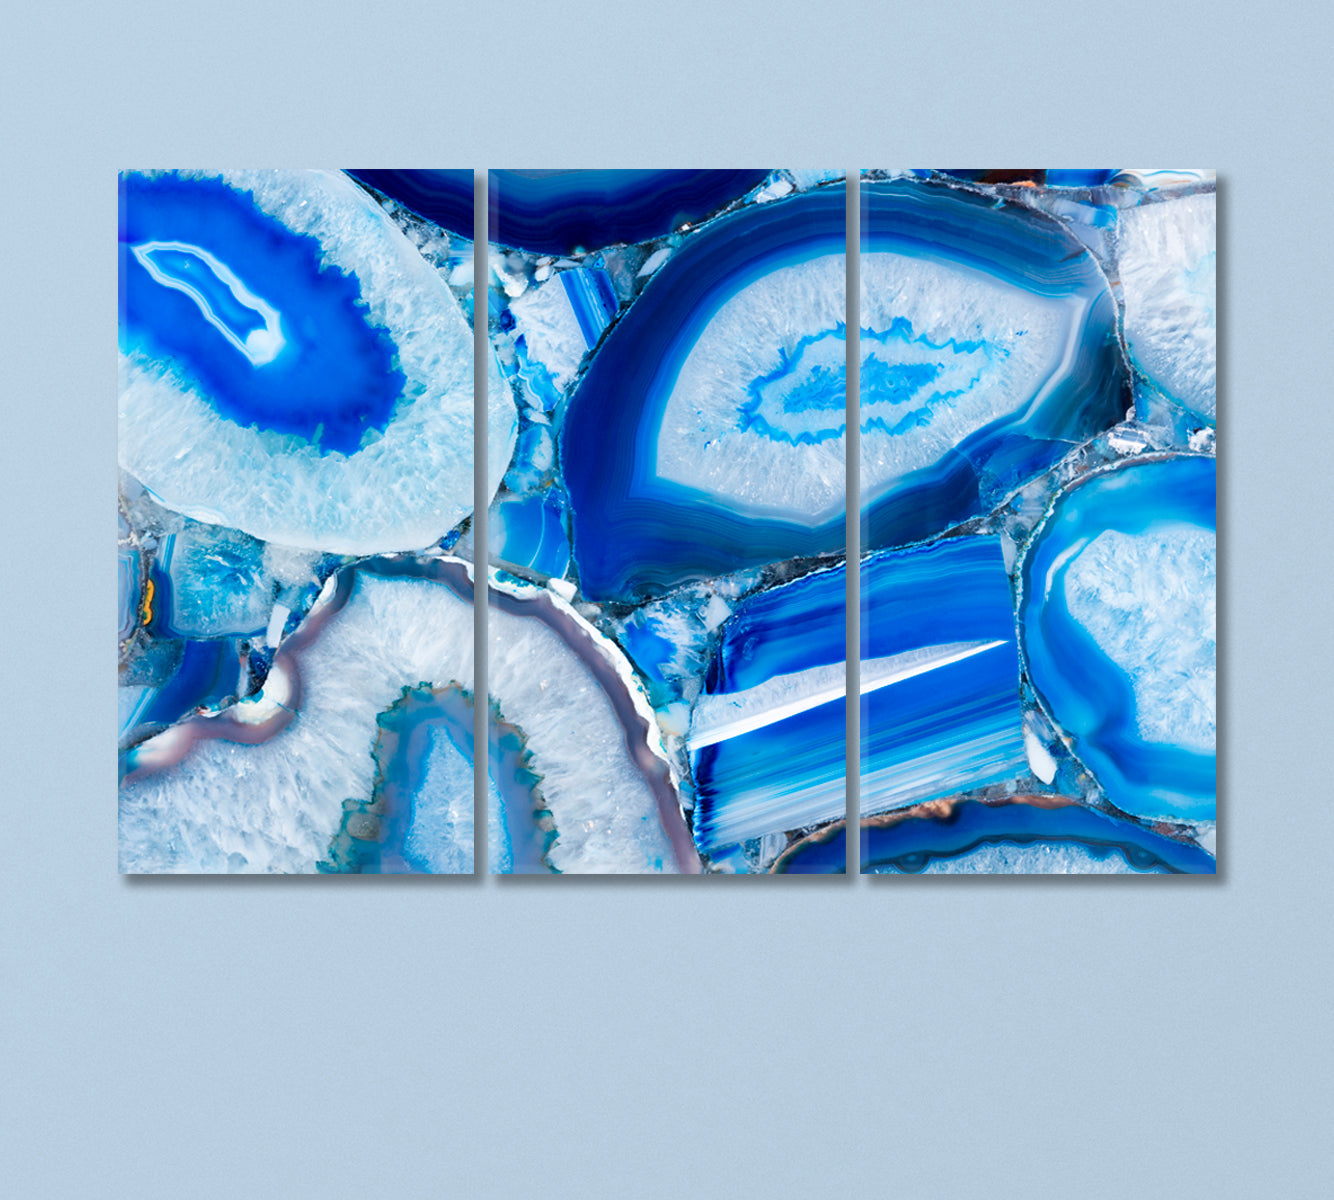 Abstract Blue Agate Canvas Print-Canvas Print-CetArt-3 Panels-36x24 inches-CetArt